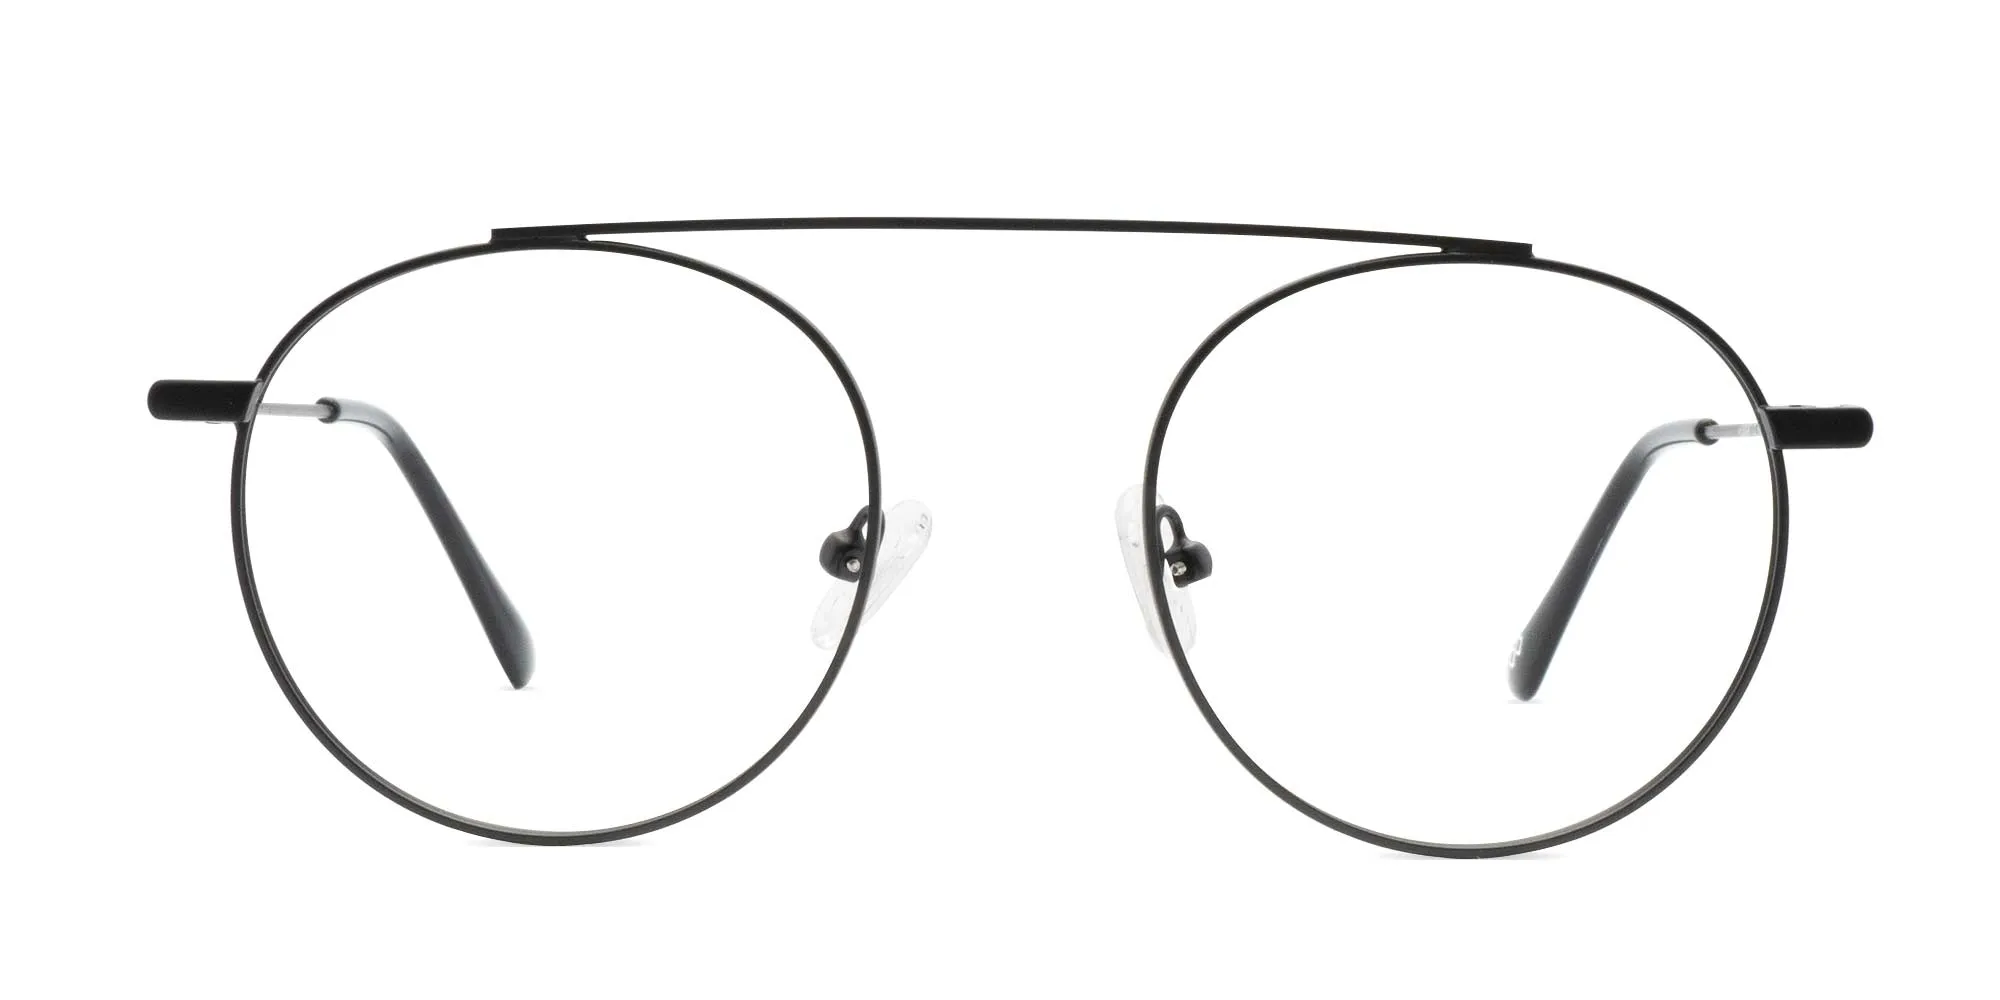 Single Bridge Glasses Frame